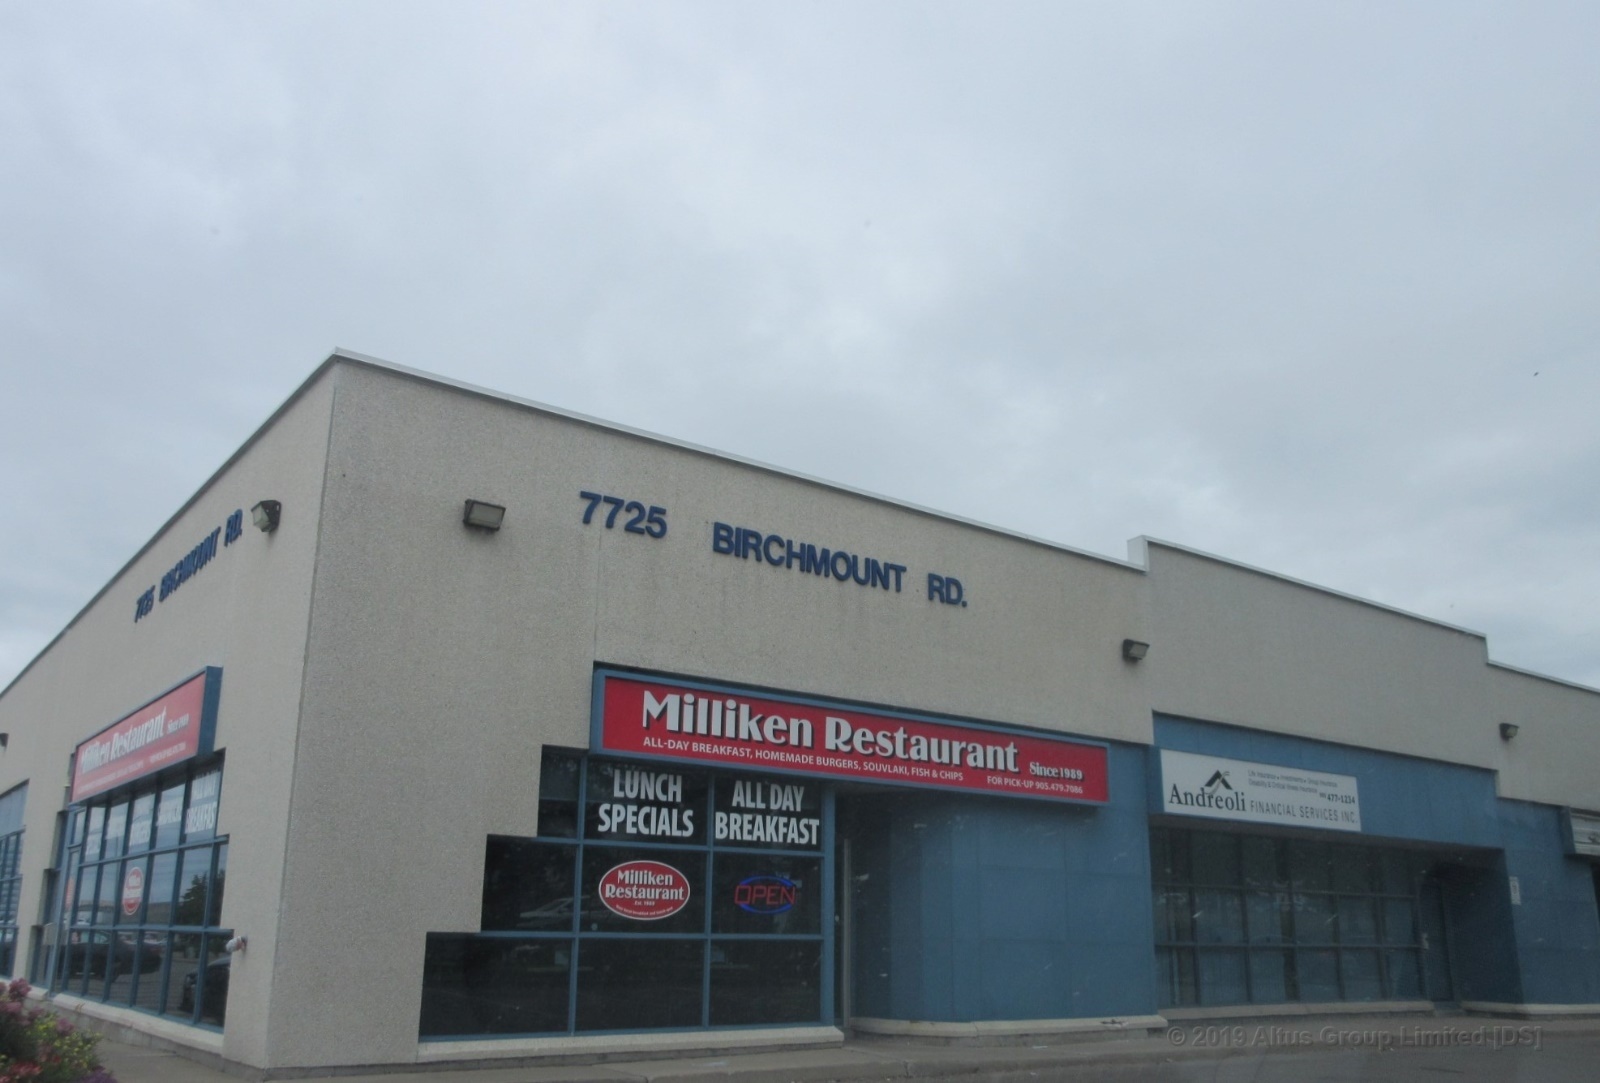 7725 Birchmount Road, Markham, Ontario